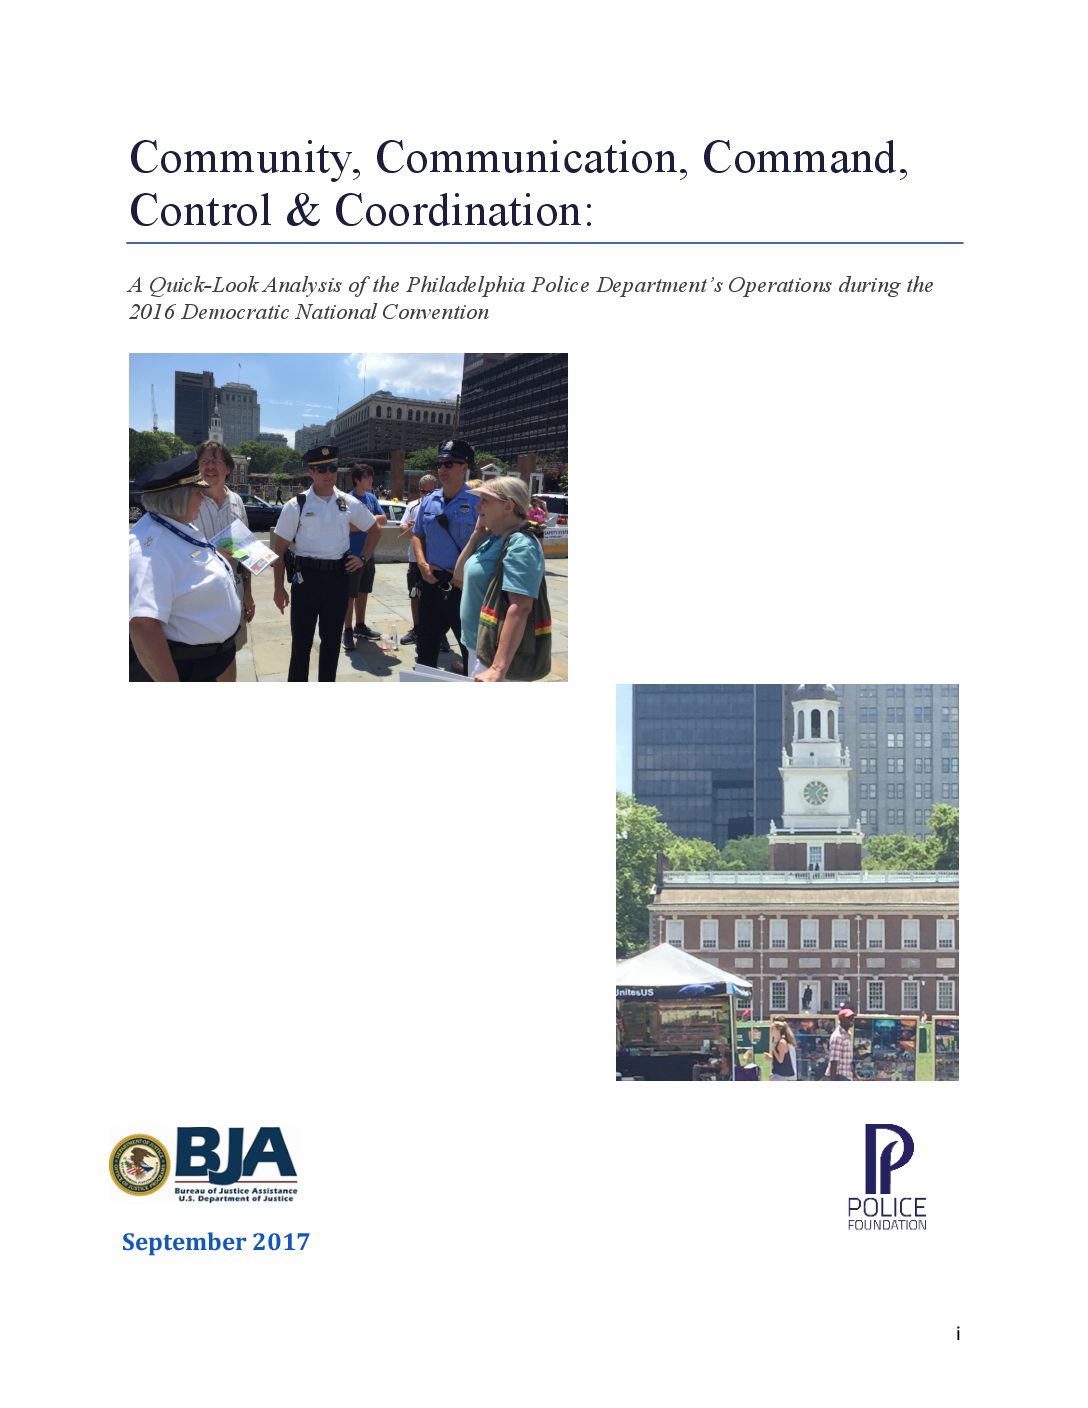 Analysis of Philadelphia PD Protection of 2016 DNC